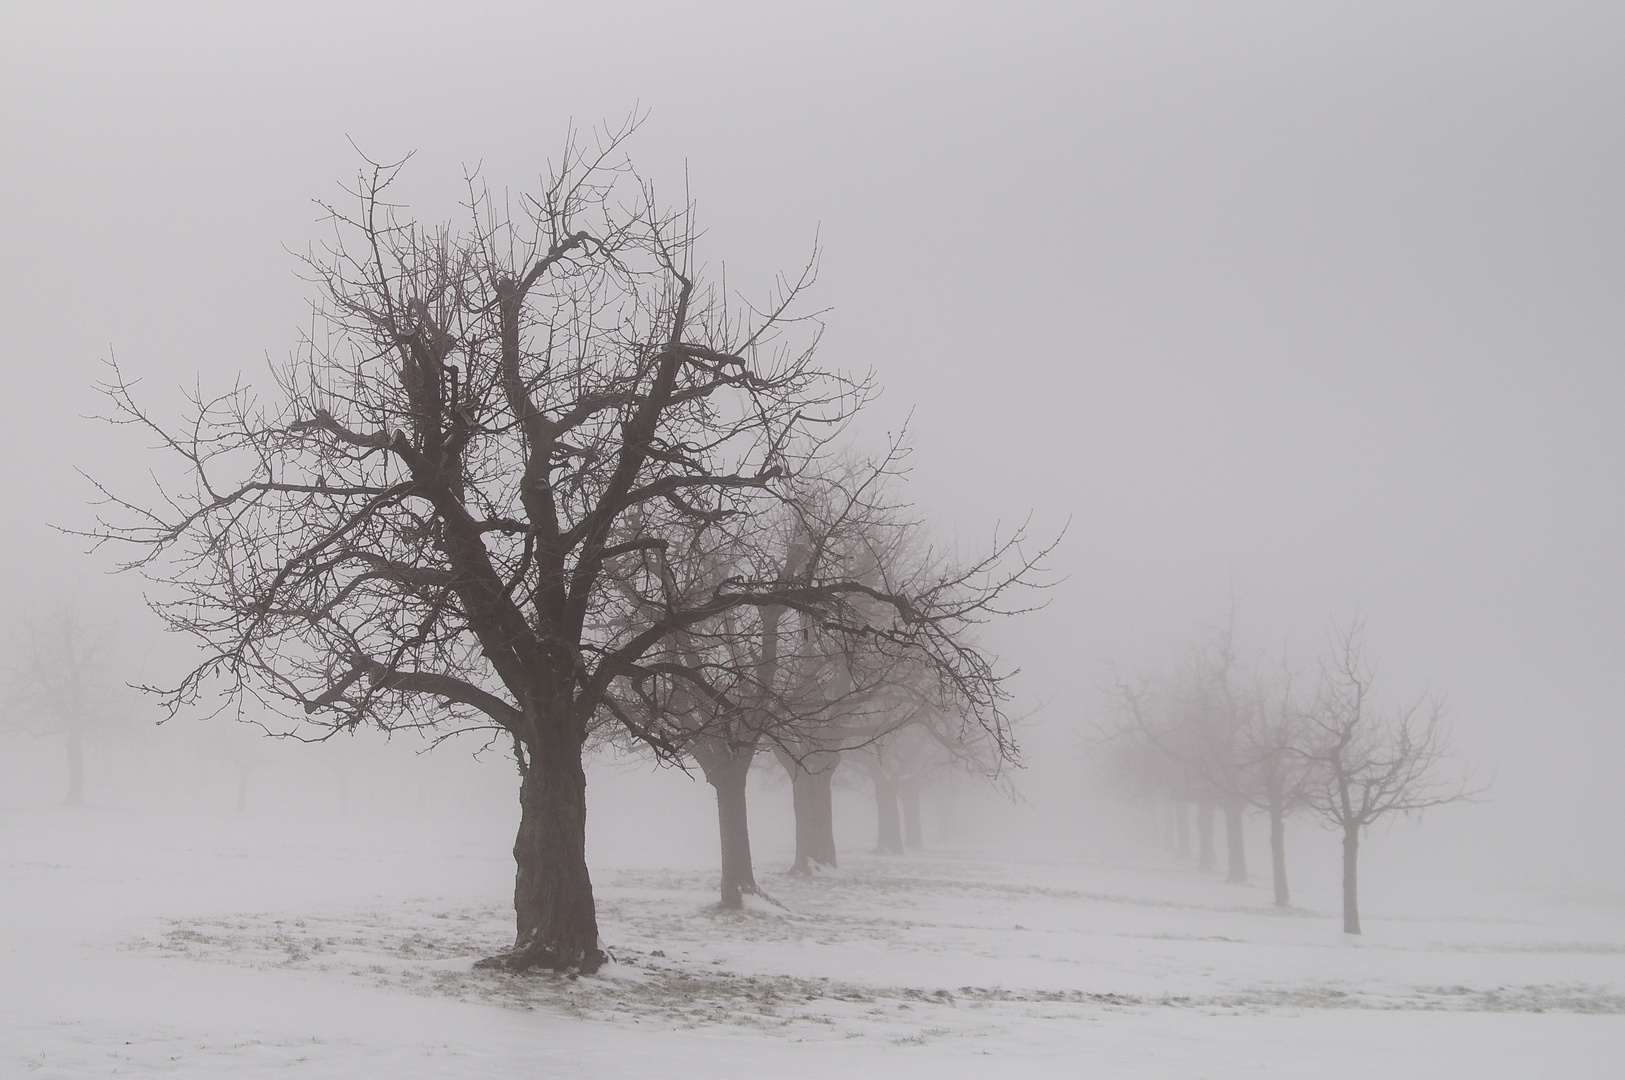 Baumgenerationen im Nebel